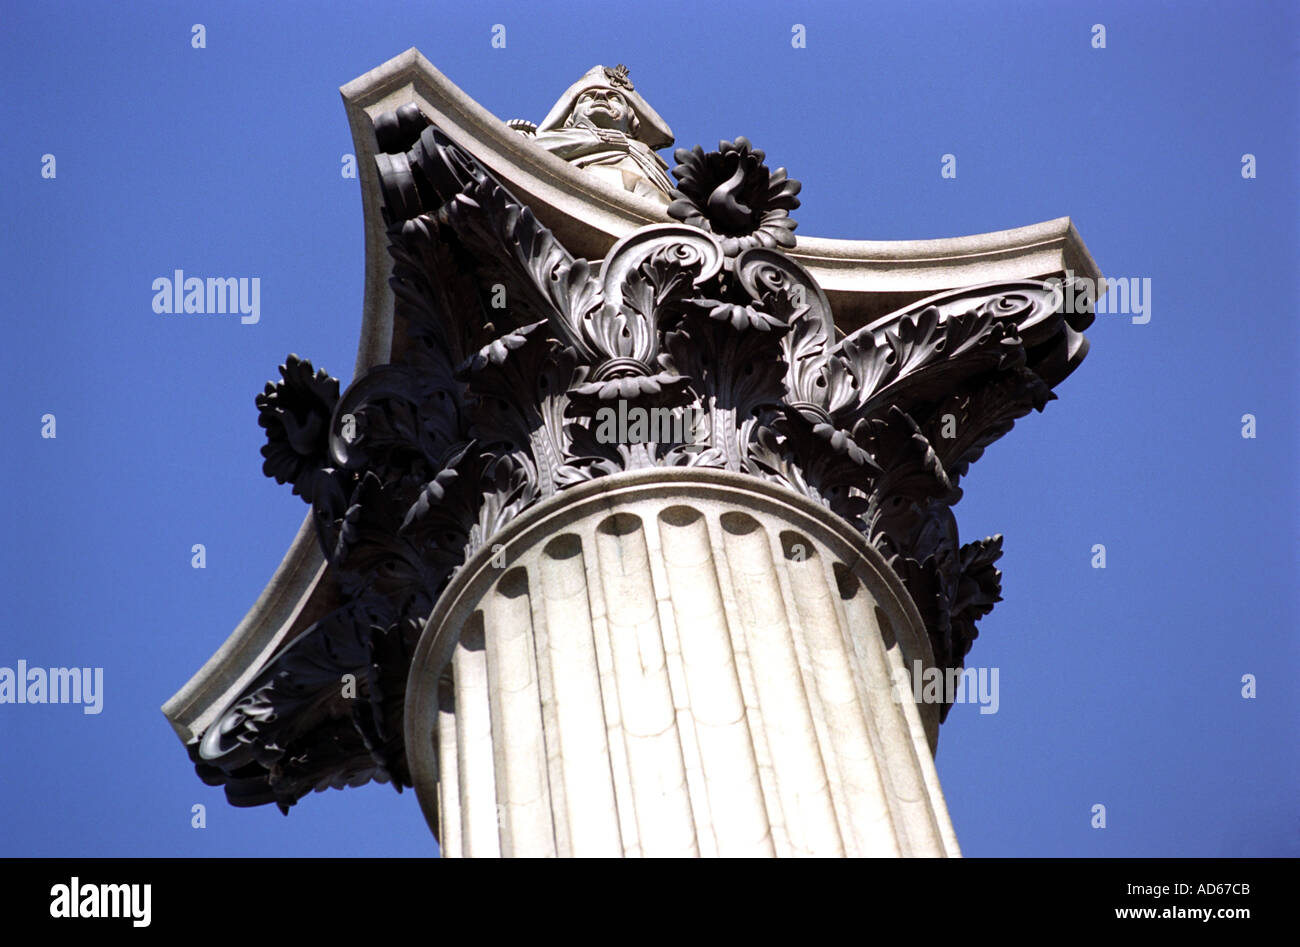 Nelson's Column in Trafalgar Square London Britain UK Stock Photo